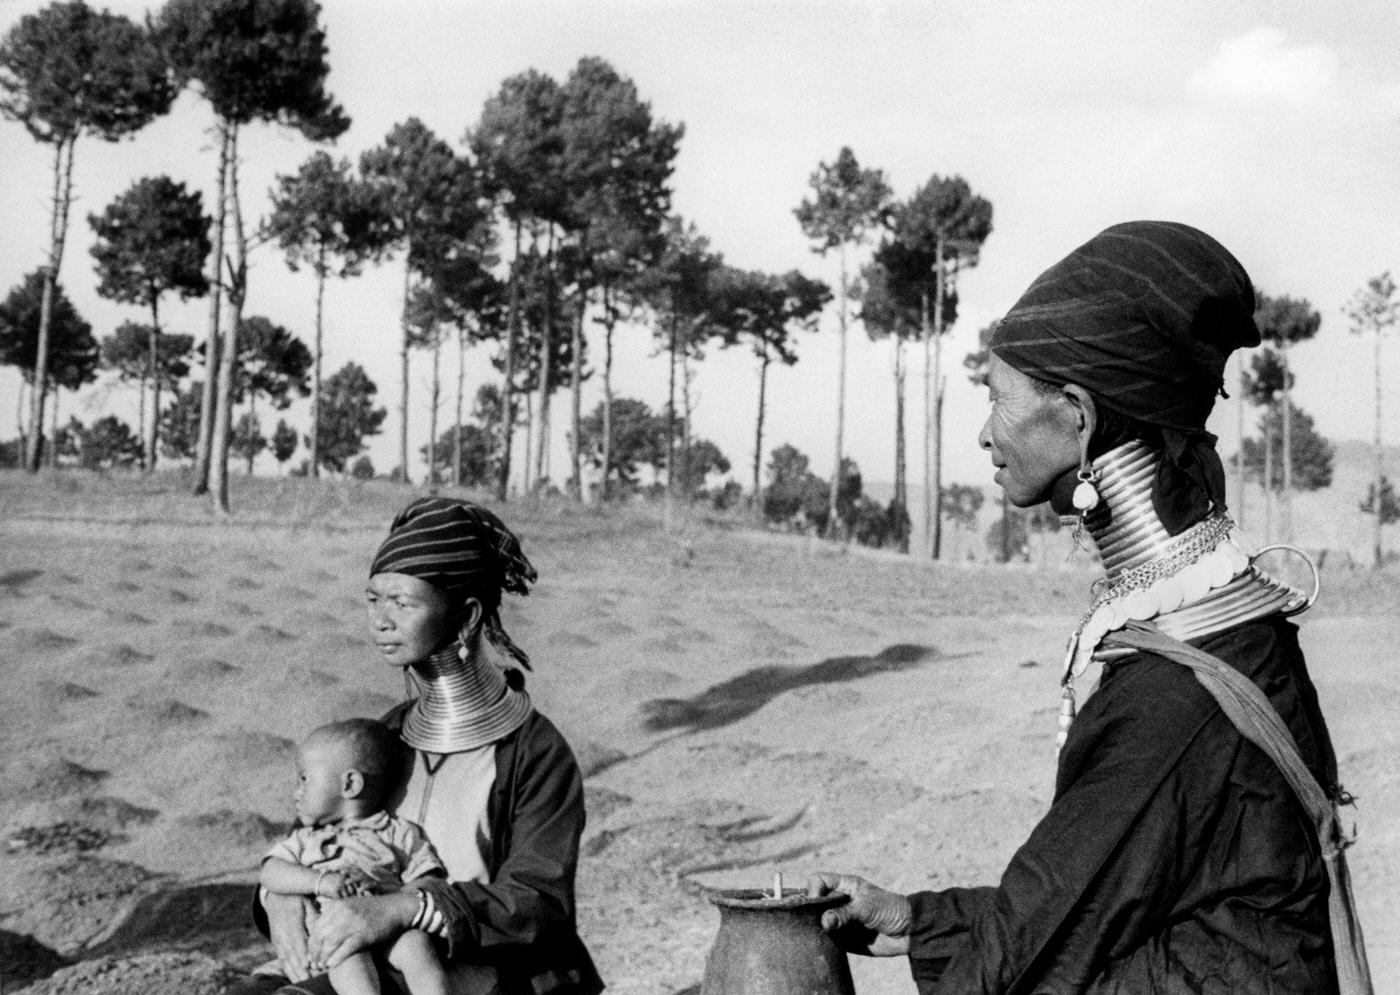 Padaung women of the Kayan region, Asia, 1959.